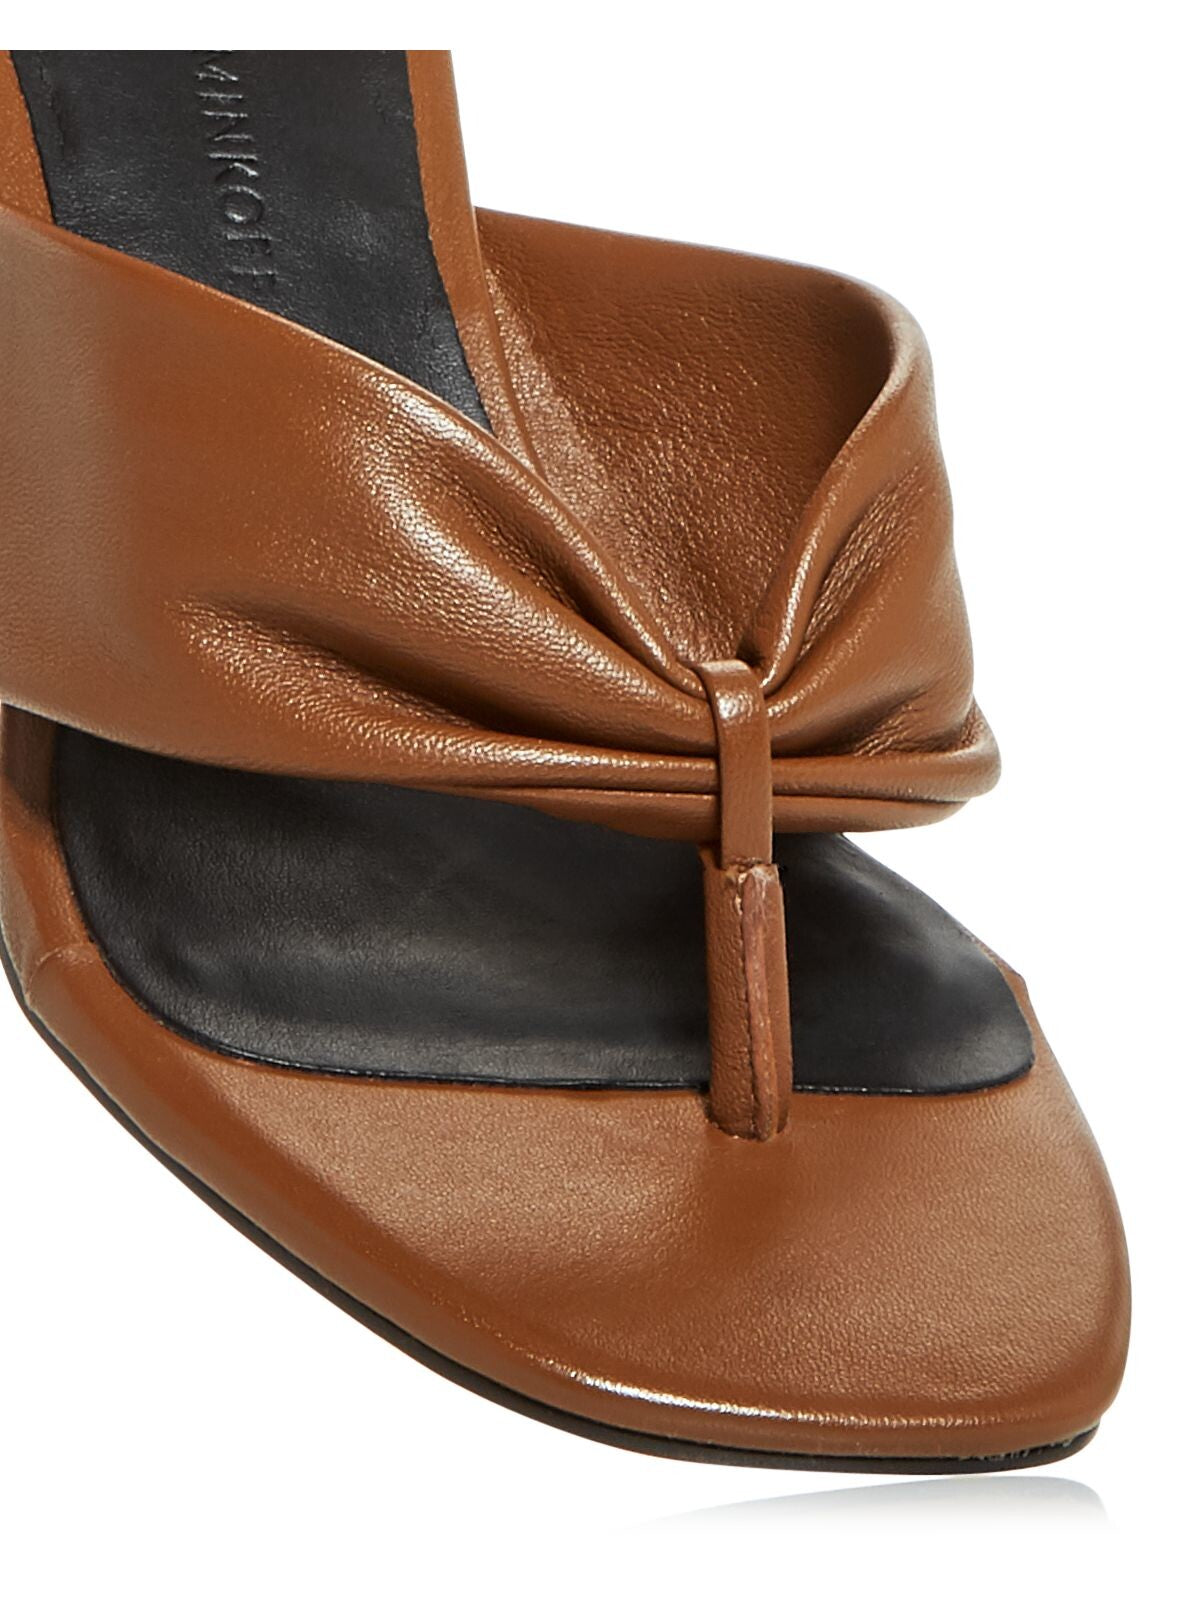 REBECCA MINKOFF Womens Sandrift Brown Snakeprint Padded Embellished Abrianna Open Toe Slip On Leather Dress Heeled Thong Sandals M